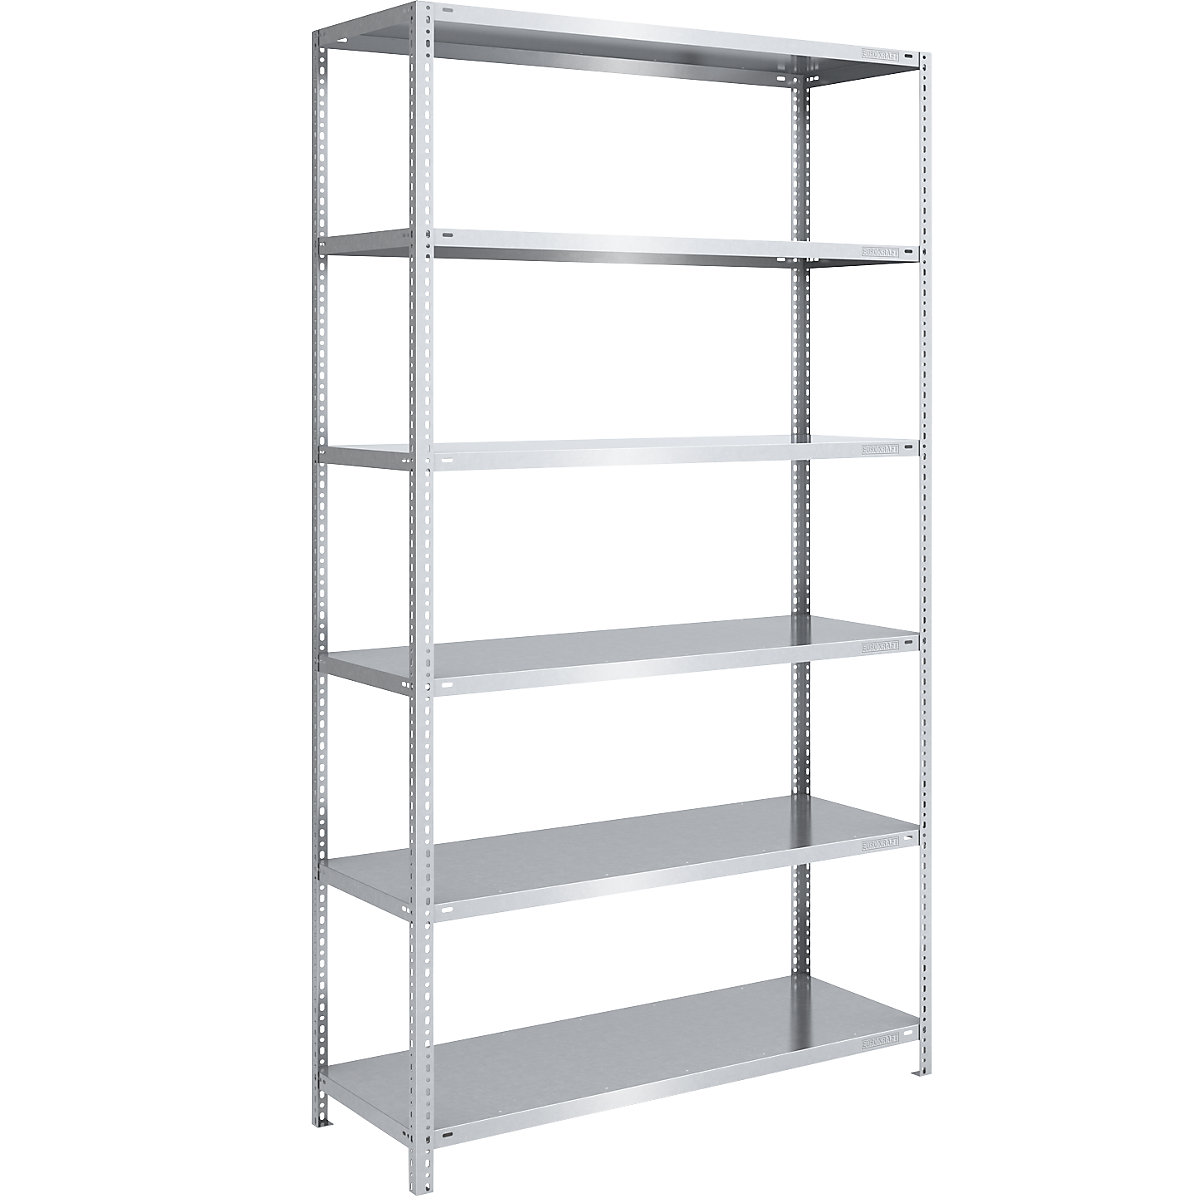 Bolt-together shelf unit, light duty, zinc plated – eurokraft pro, shelf unit height 2500 mm, shelf width 1300 mm, depth 600 mm, standard shelf unit-13